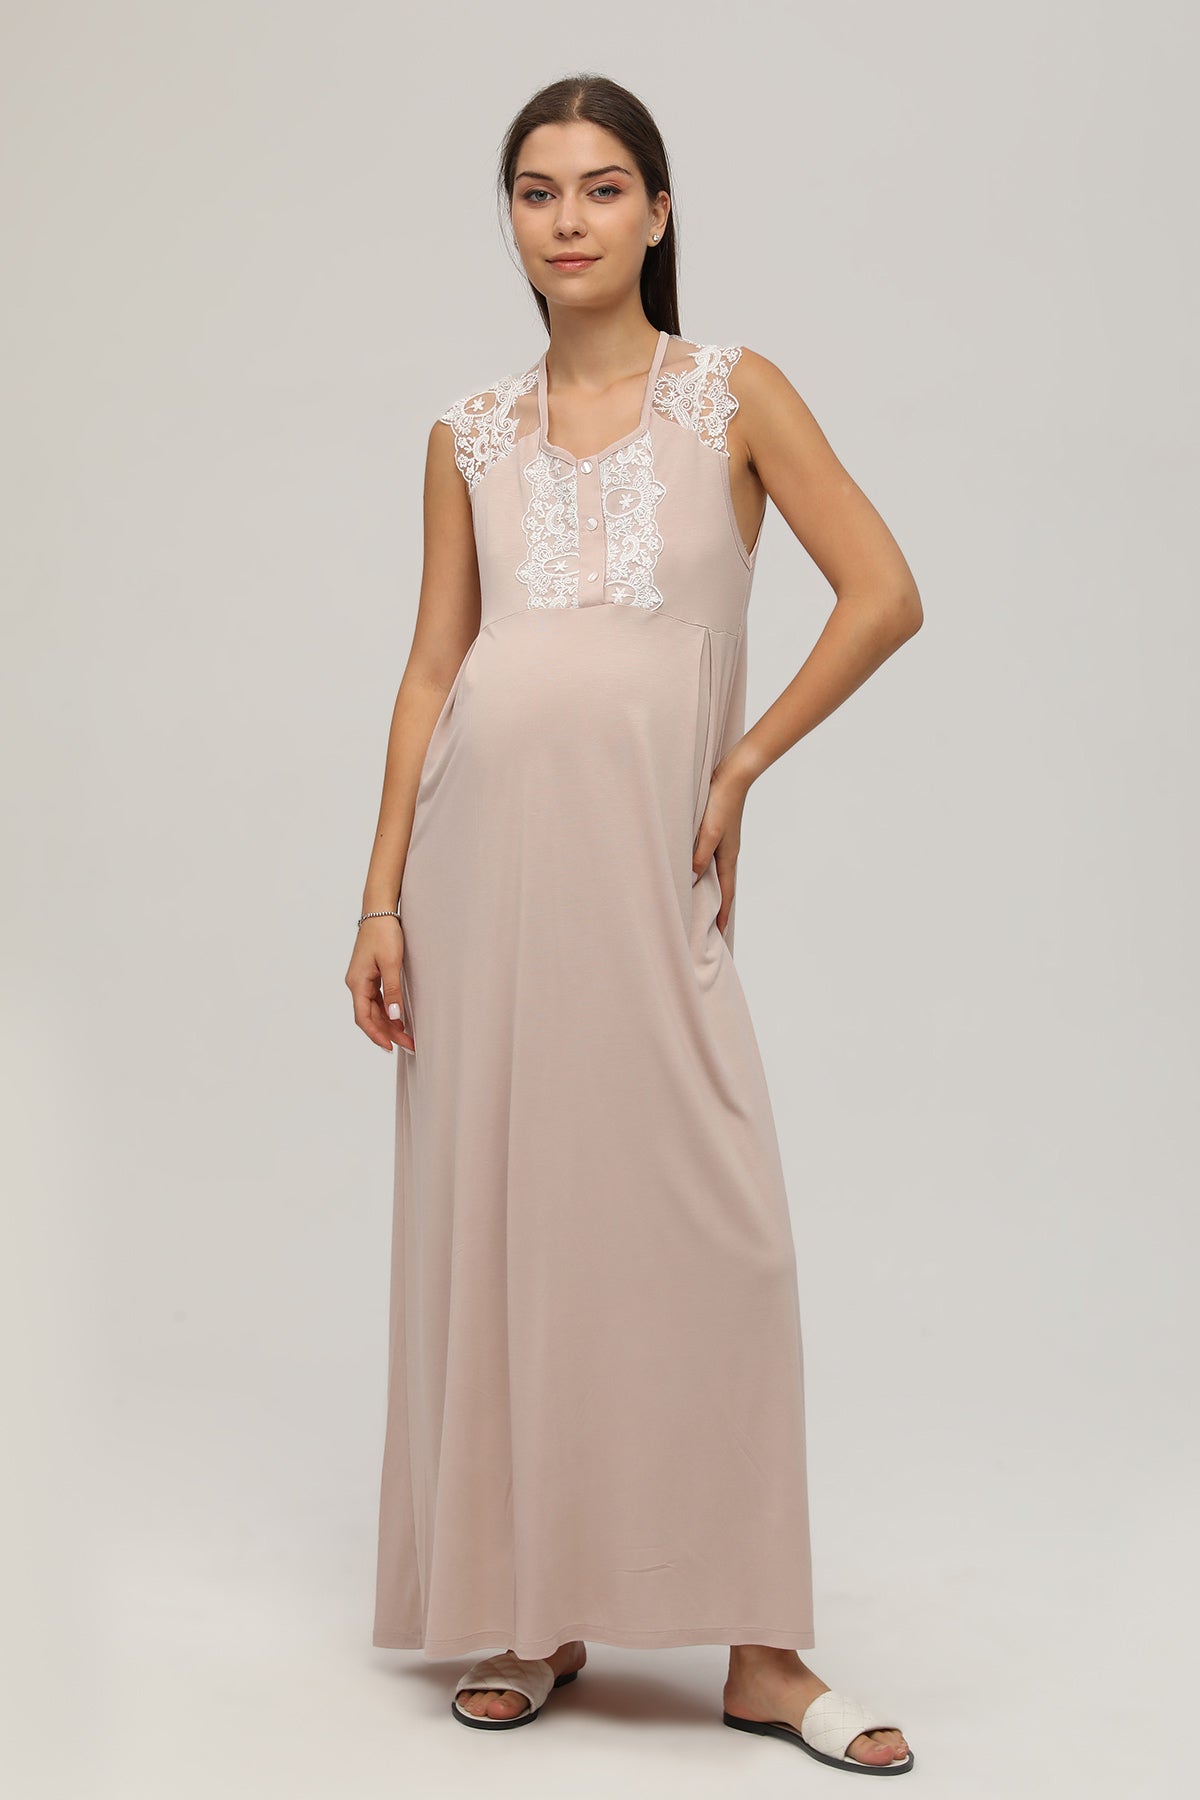 Shopymommy 107 Lace Shoulder Maternity & Nursing Nightgown Beige